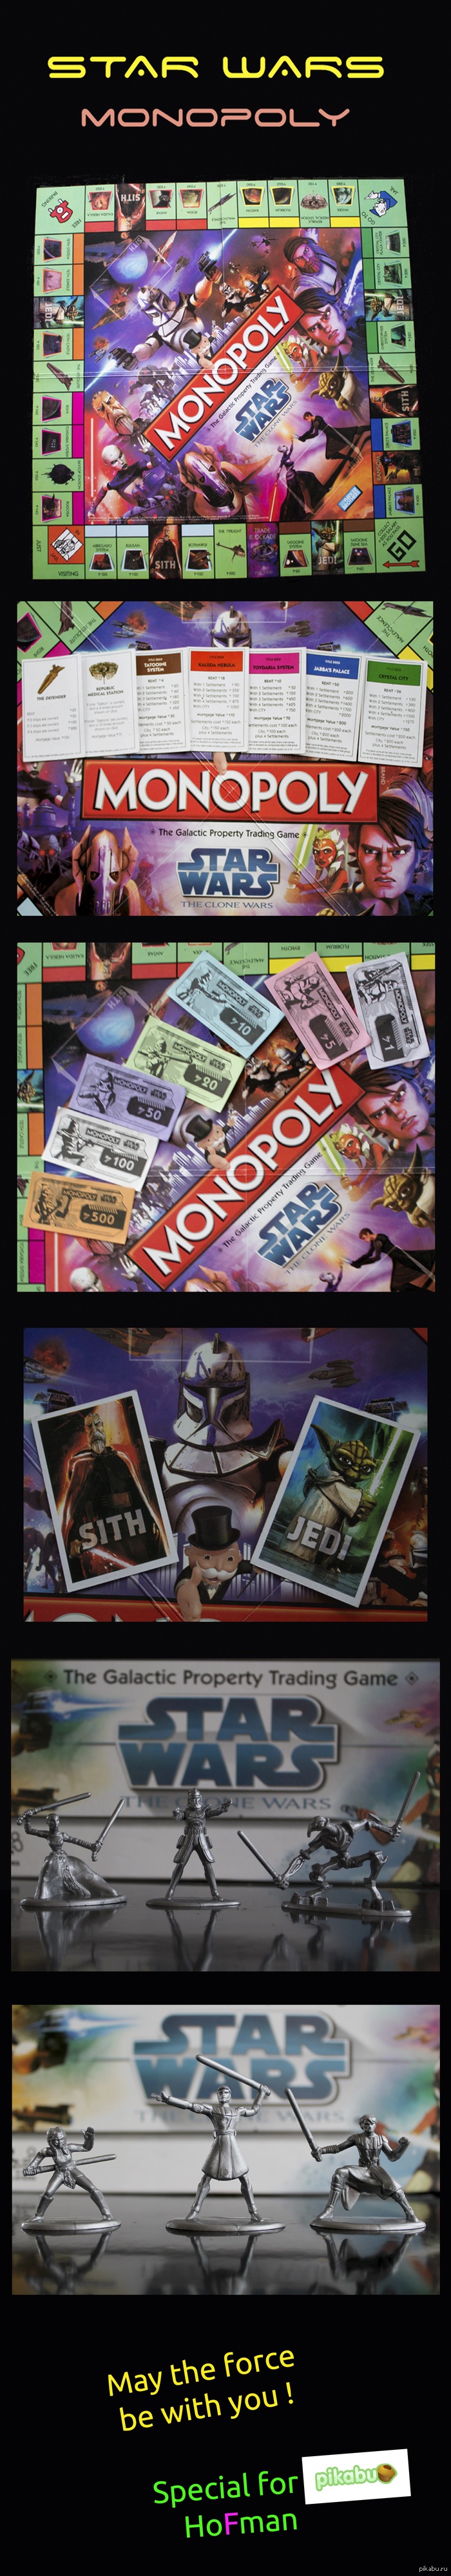 Star Wars in Monopoly !   